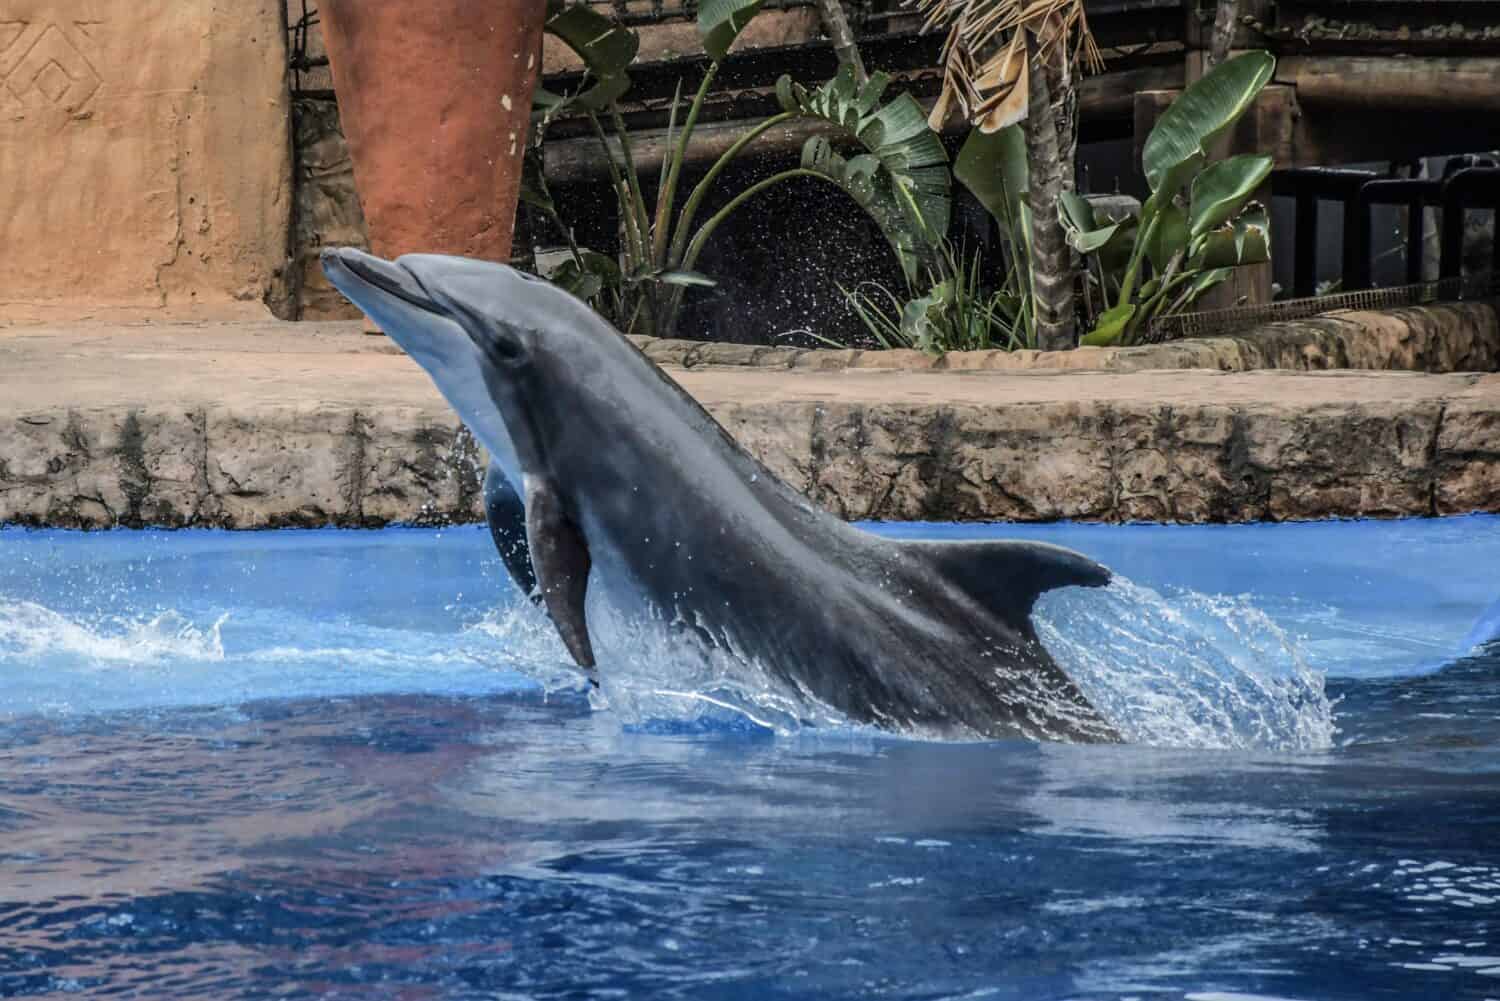 Ushaka marineworld dolphin show in Durban, biggest attraction in Kwazulu natal south africa